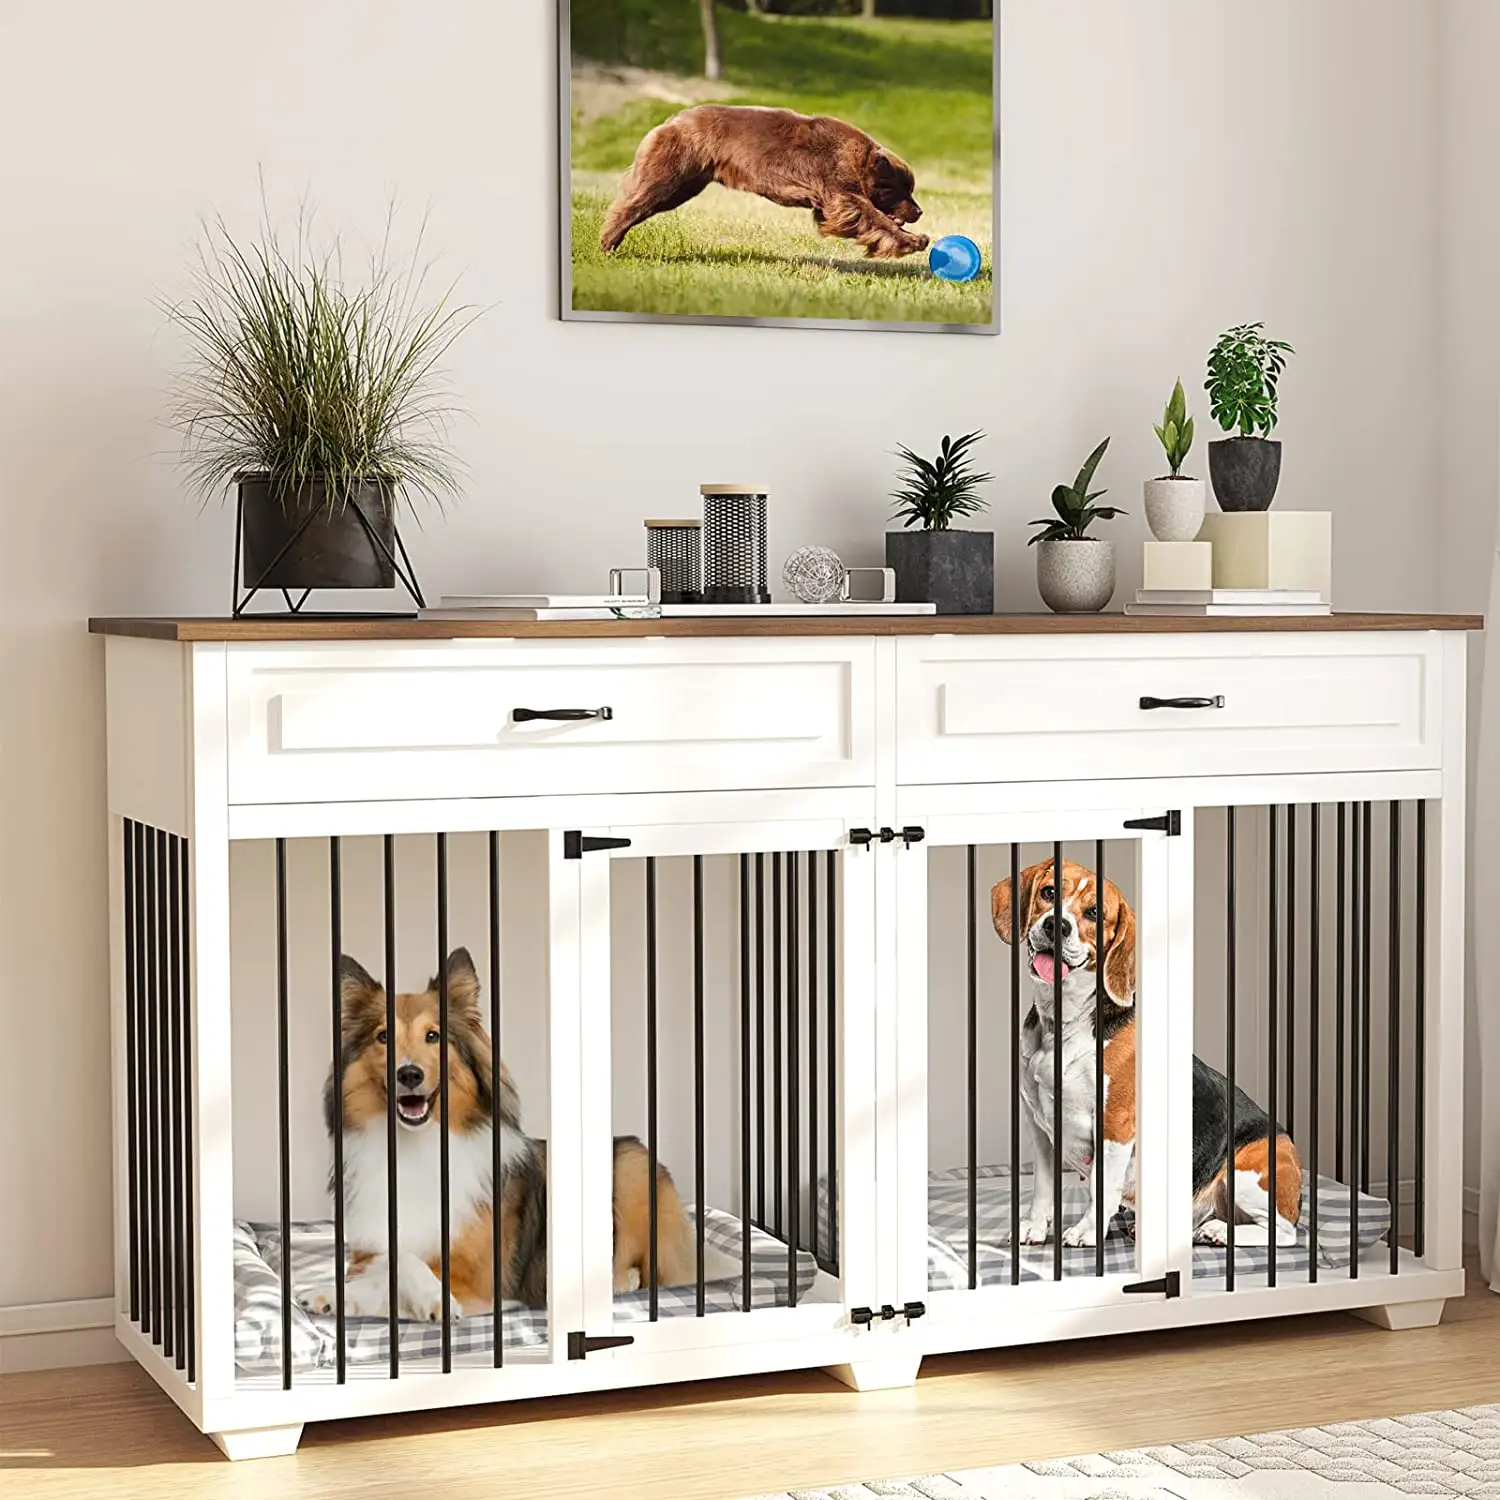 ZMaker Large Dog Crate Furniture cuccia per cani con 2 cassetti e divisorio mobili per gabbie per cani pesanti